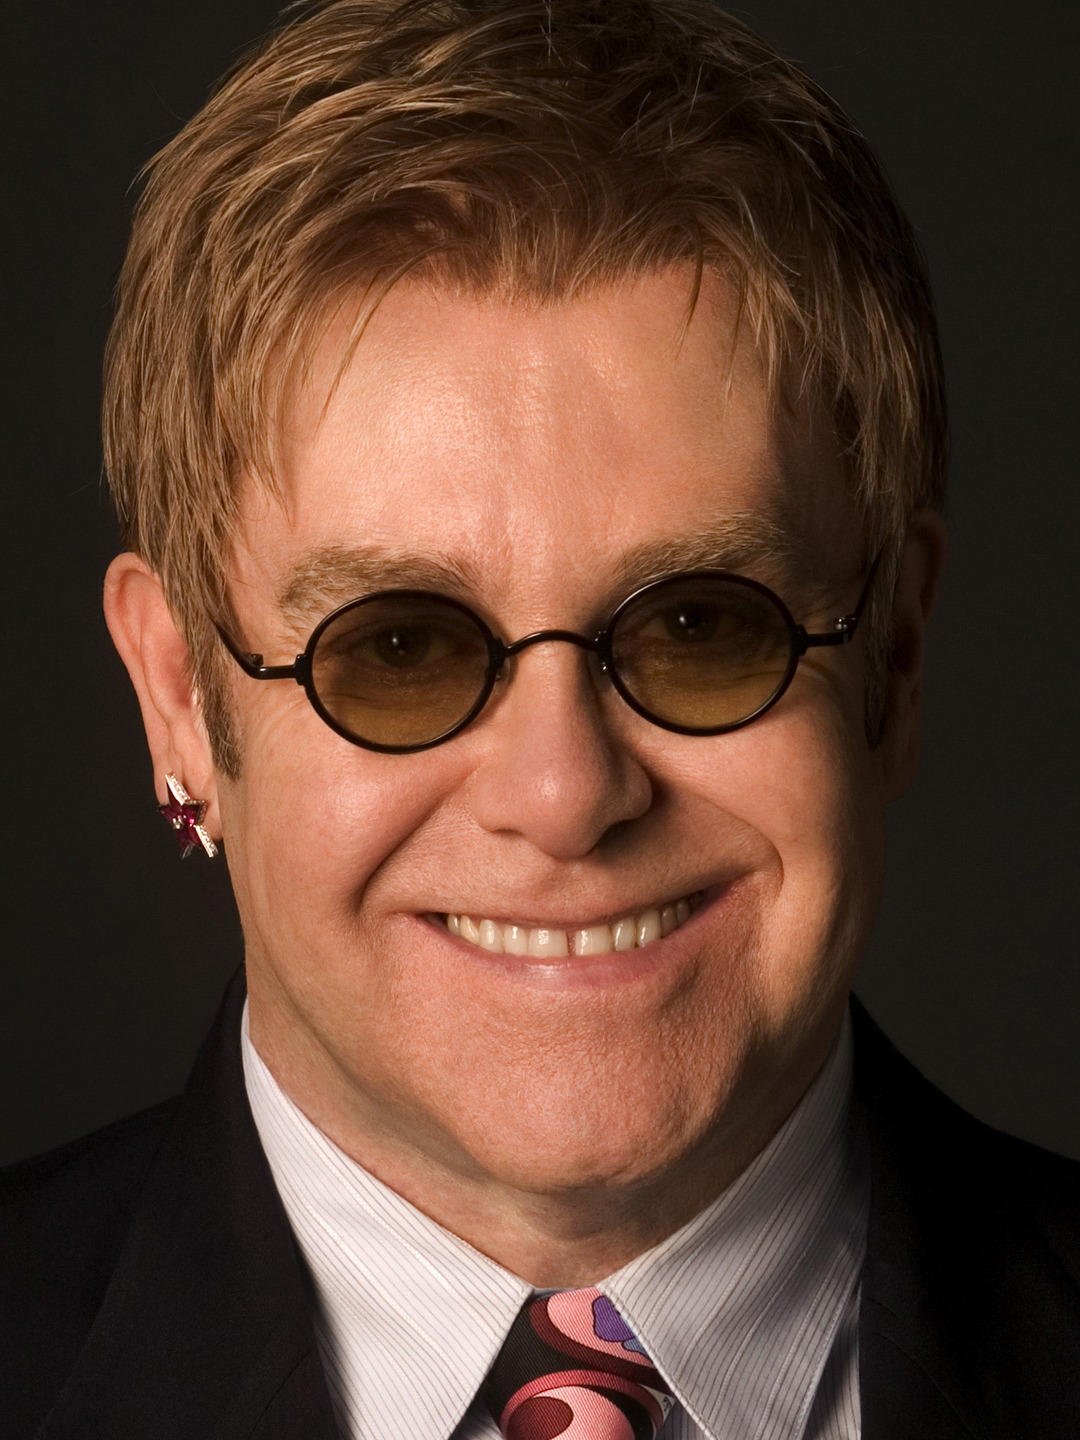 Elton John interesting facts